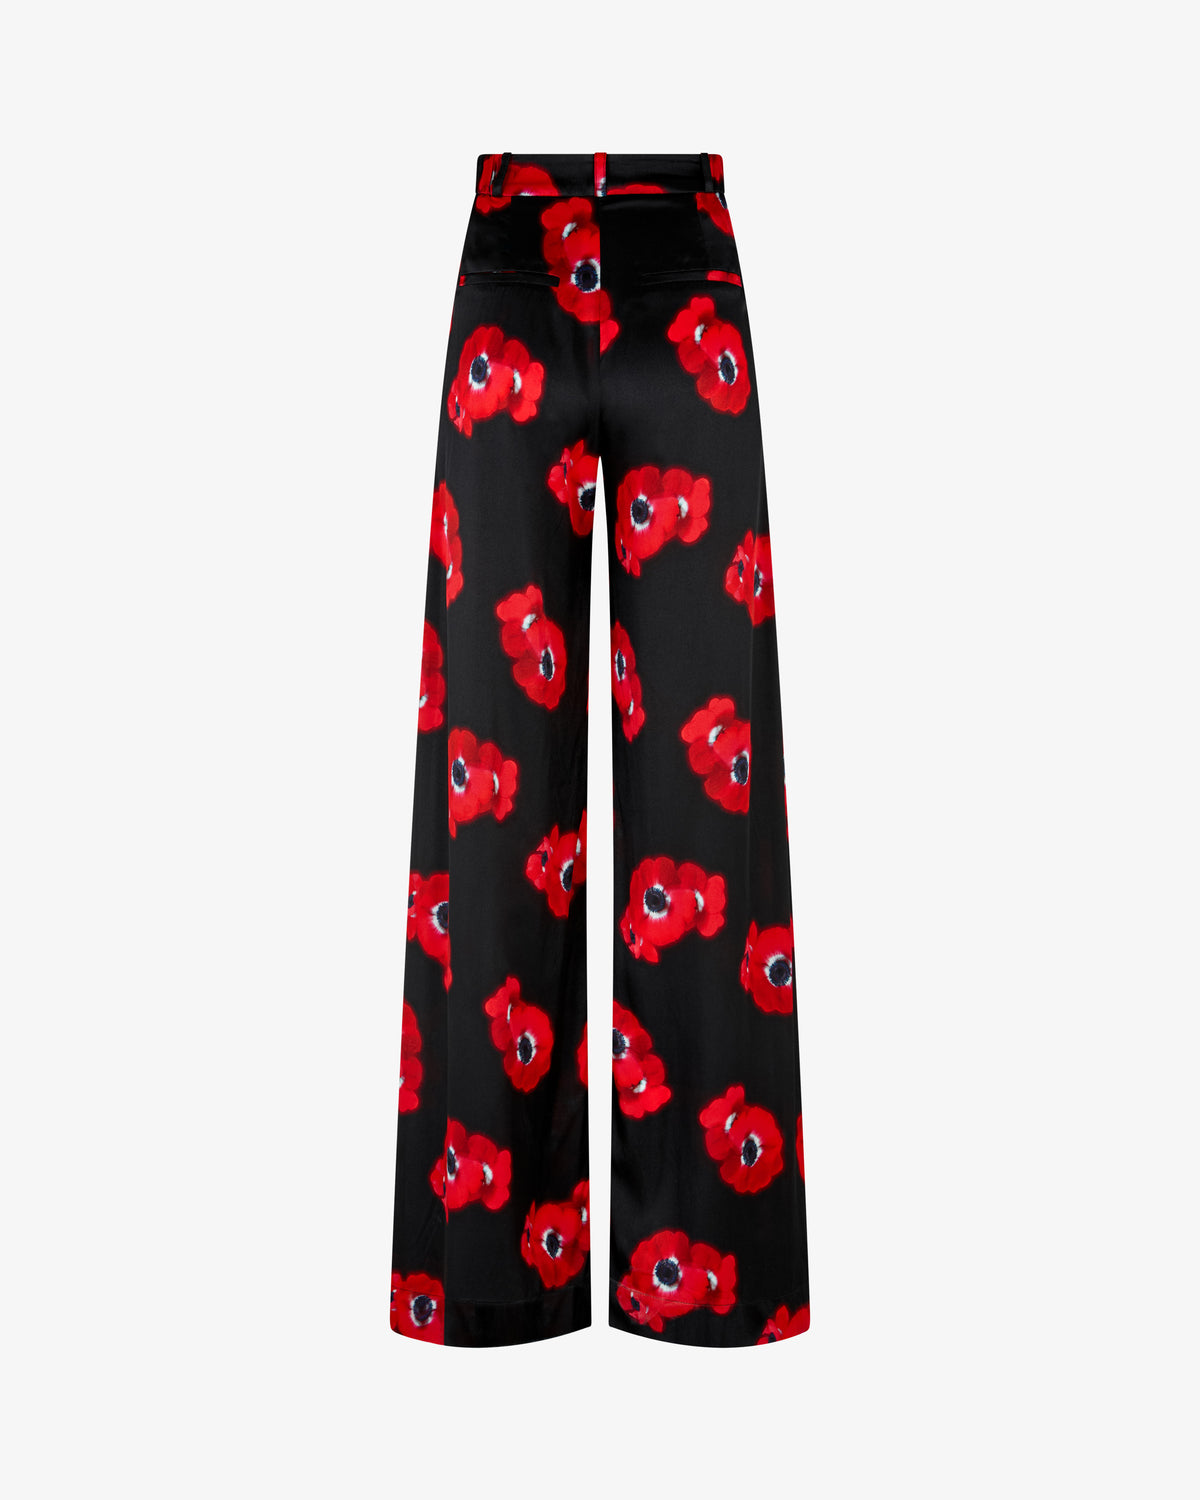 Graphic Poppy Serena Wide Leg Trouser - Black/Red